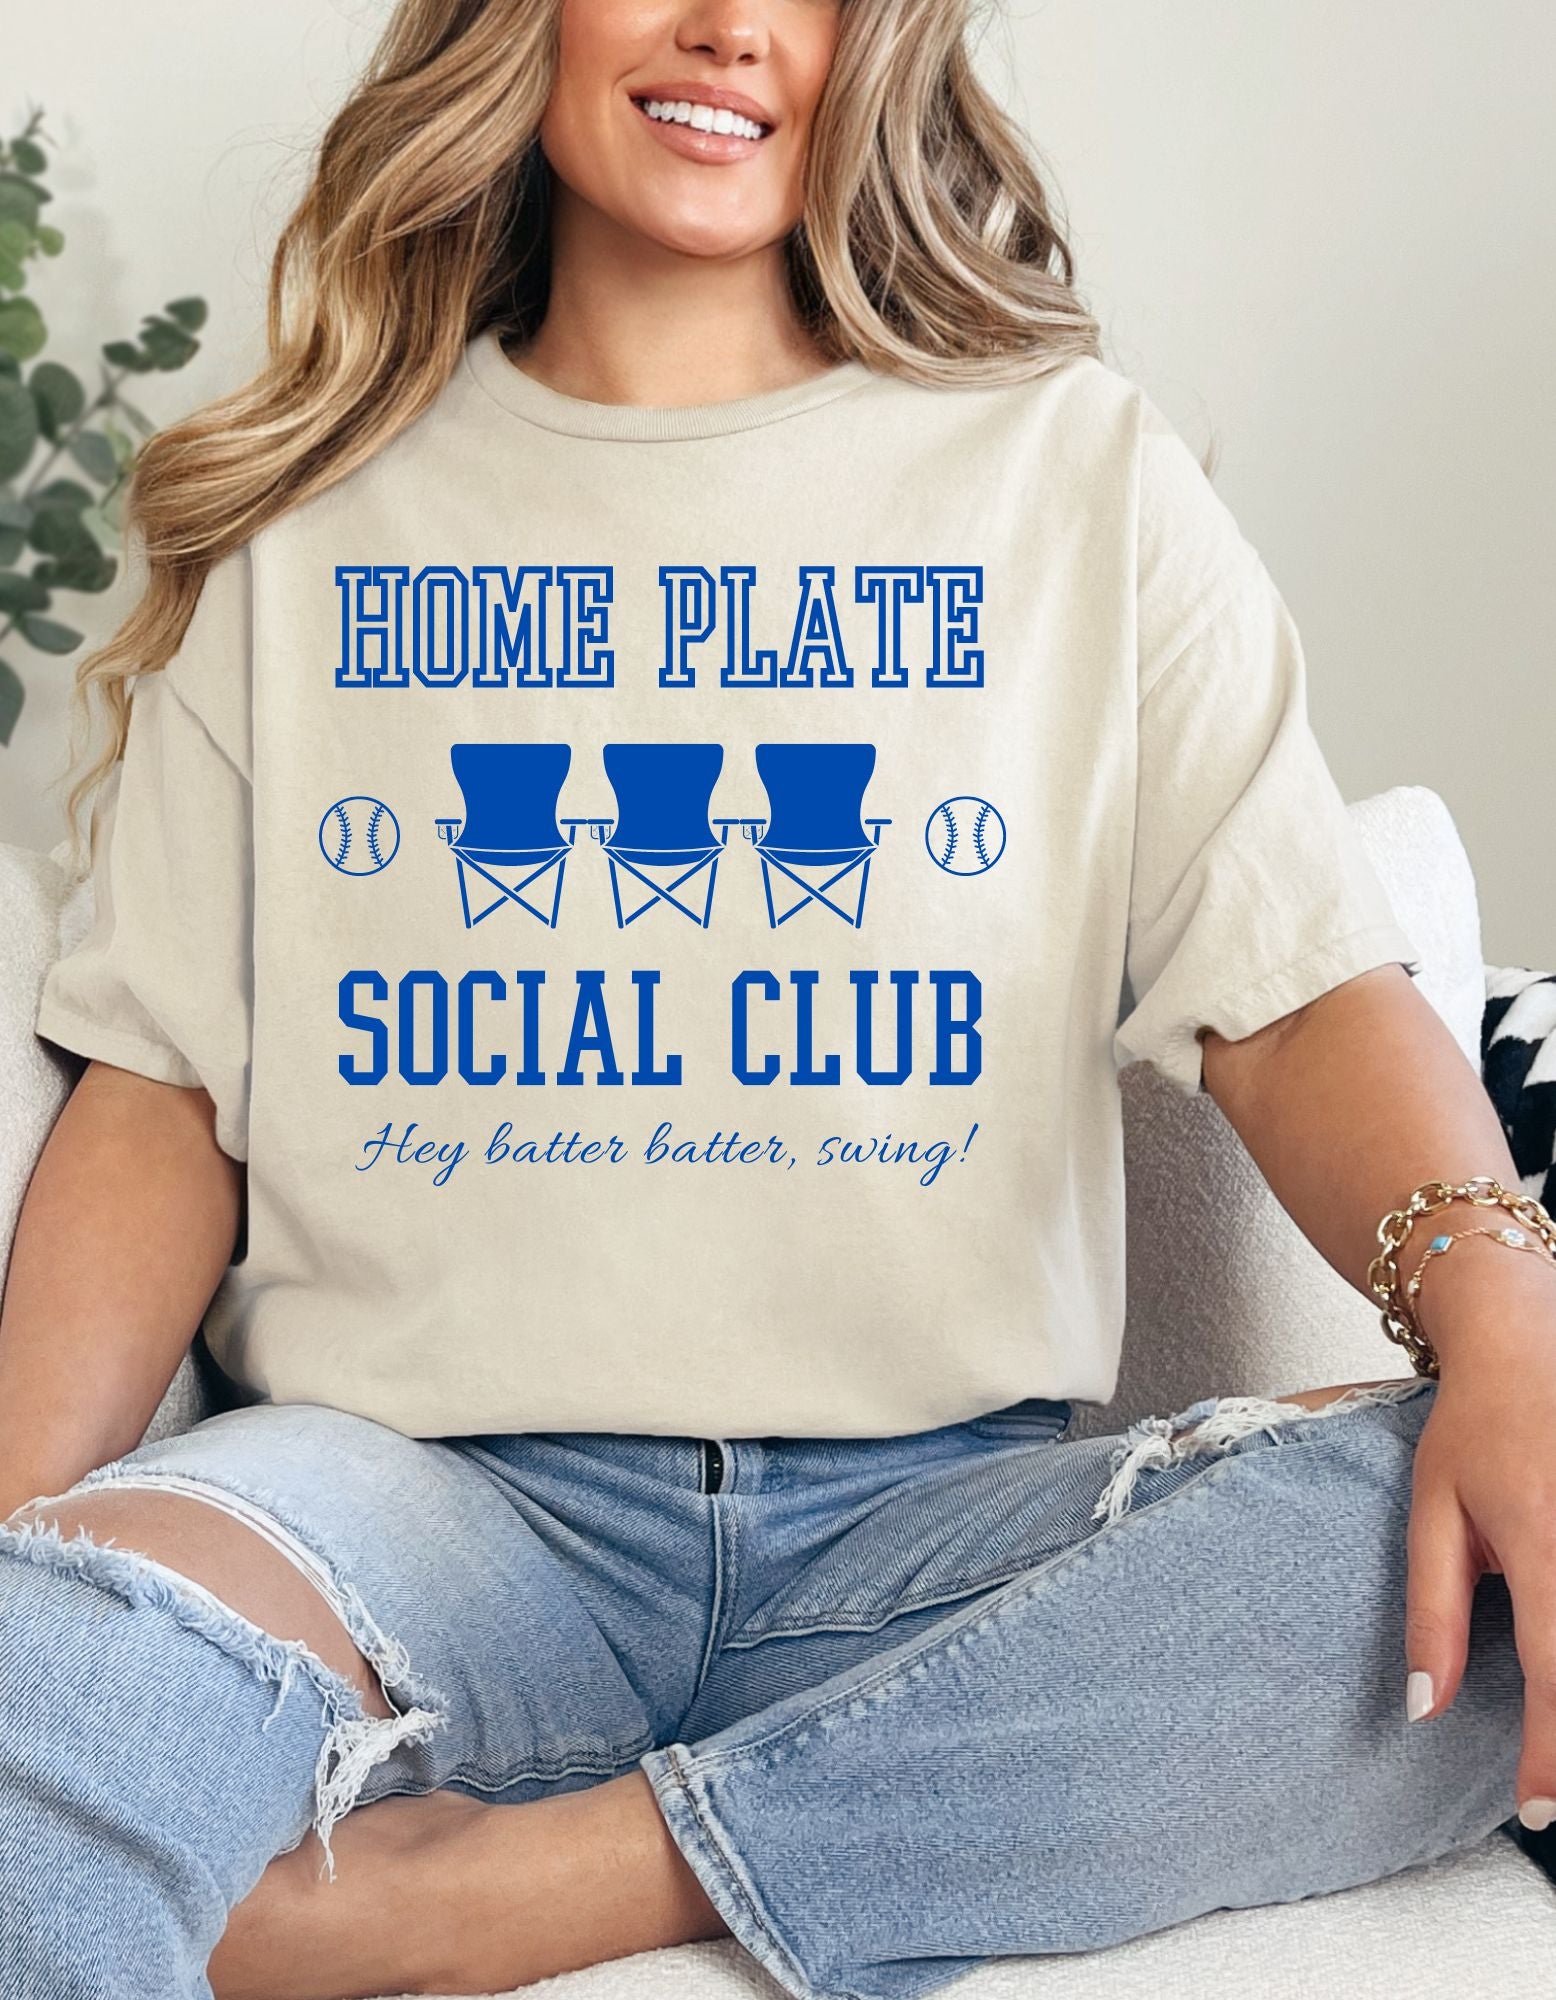 Home Plate Social Club Tee